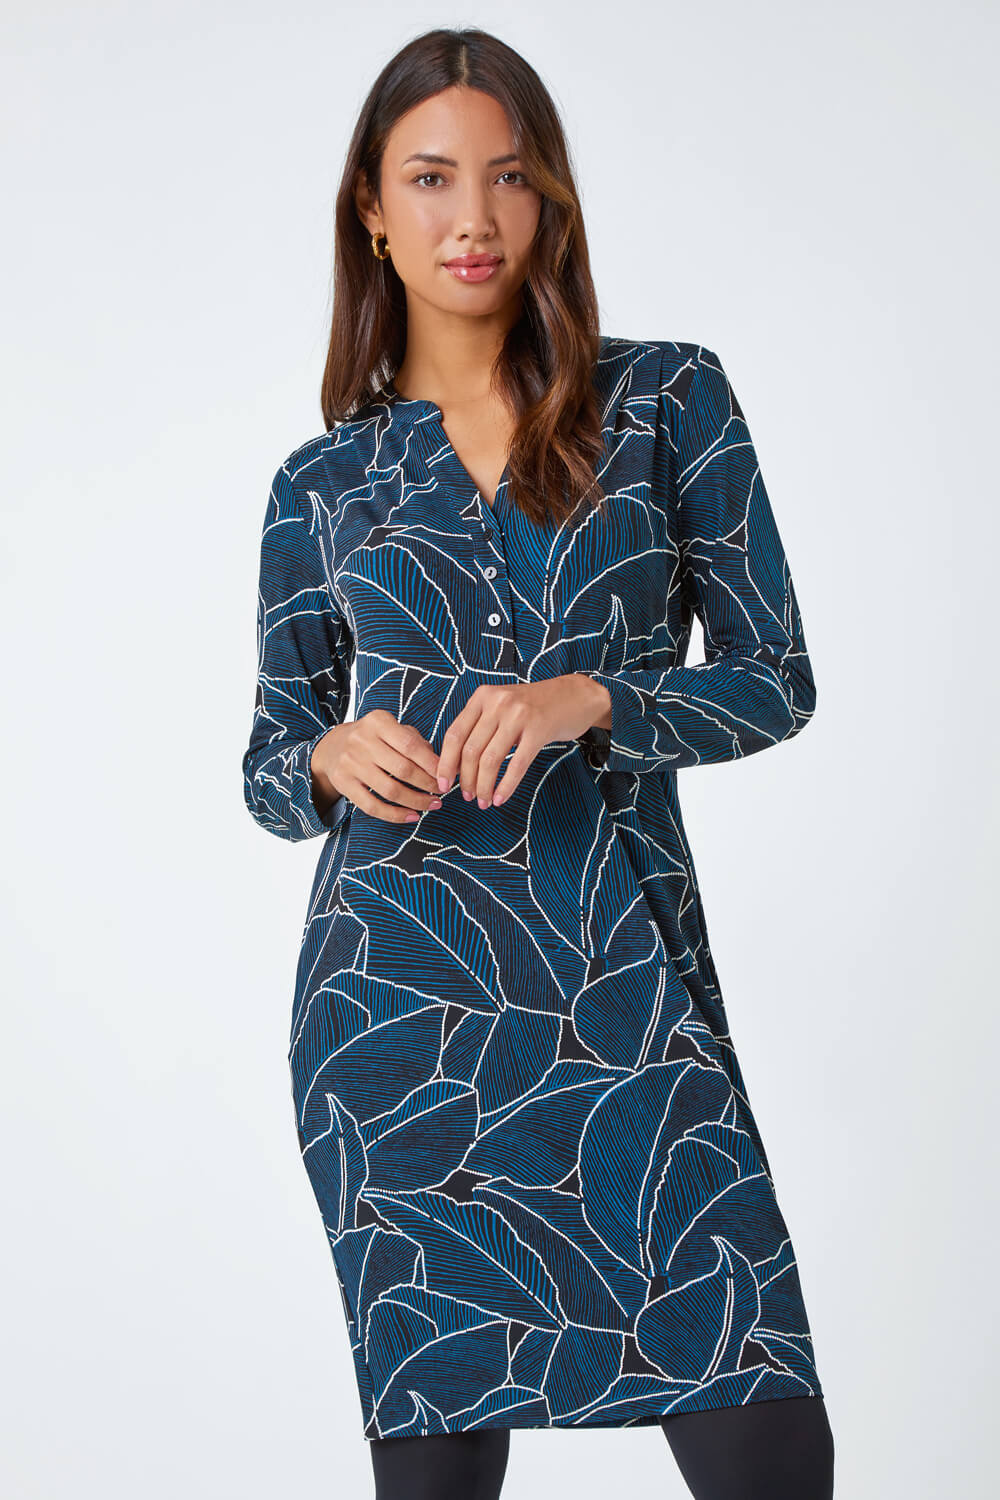 Teal Leaf Print Cocoon Stretch Dress | Roman UK